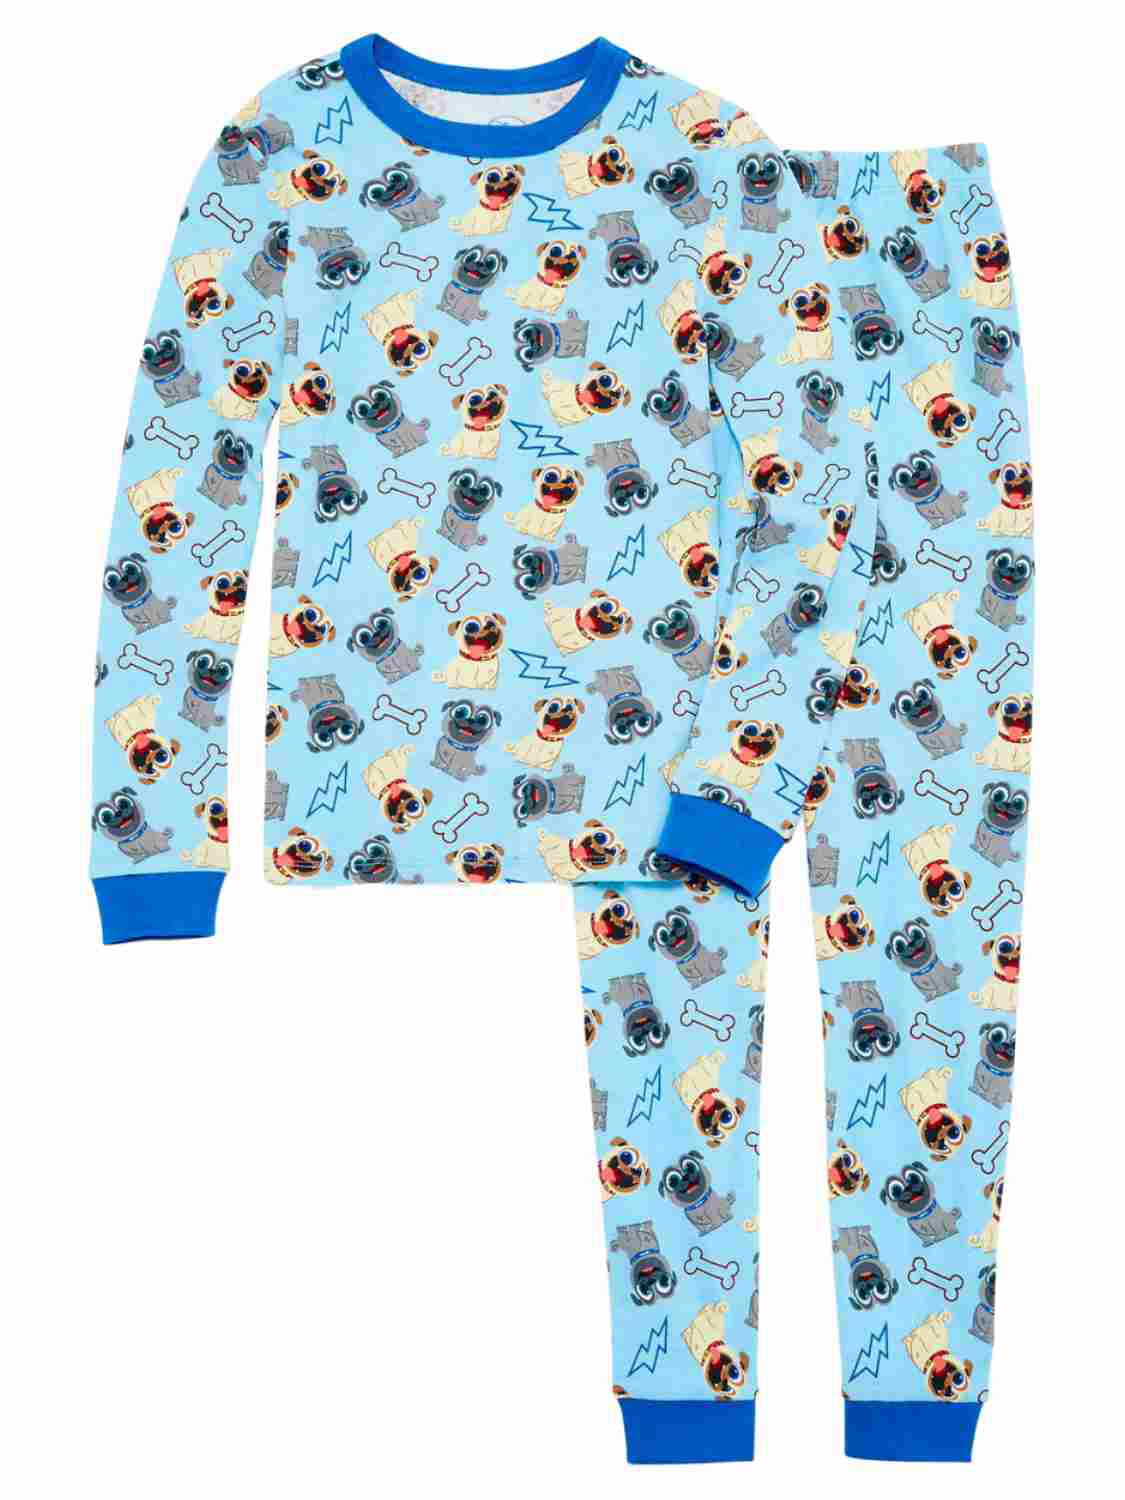 Puppy Dog Pals Toddler Boys Bingo & Rolly 2pc Pajama Short Set Size 2T 3T 4T $36 